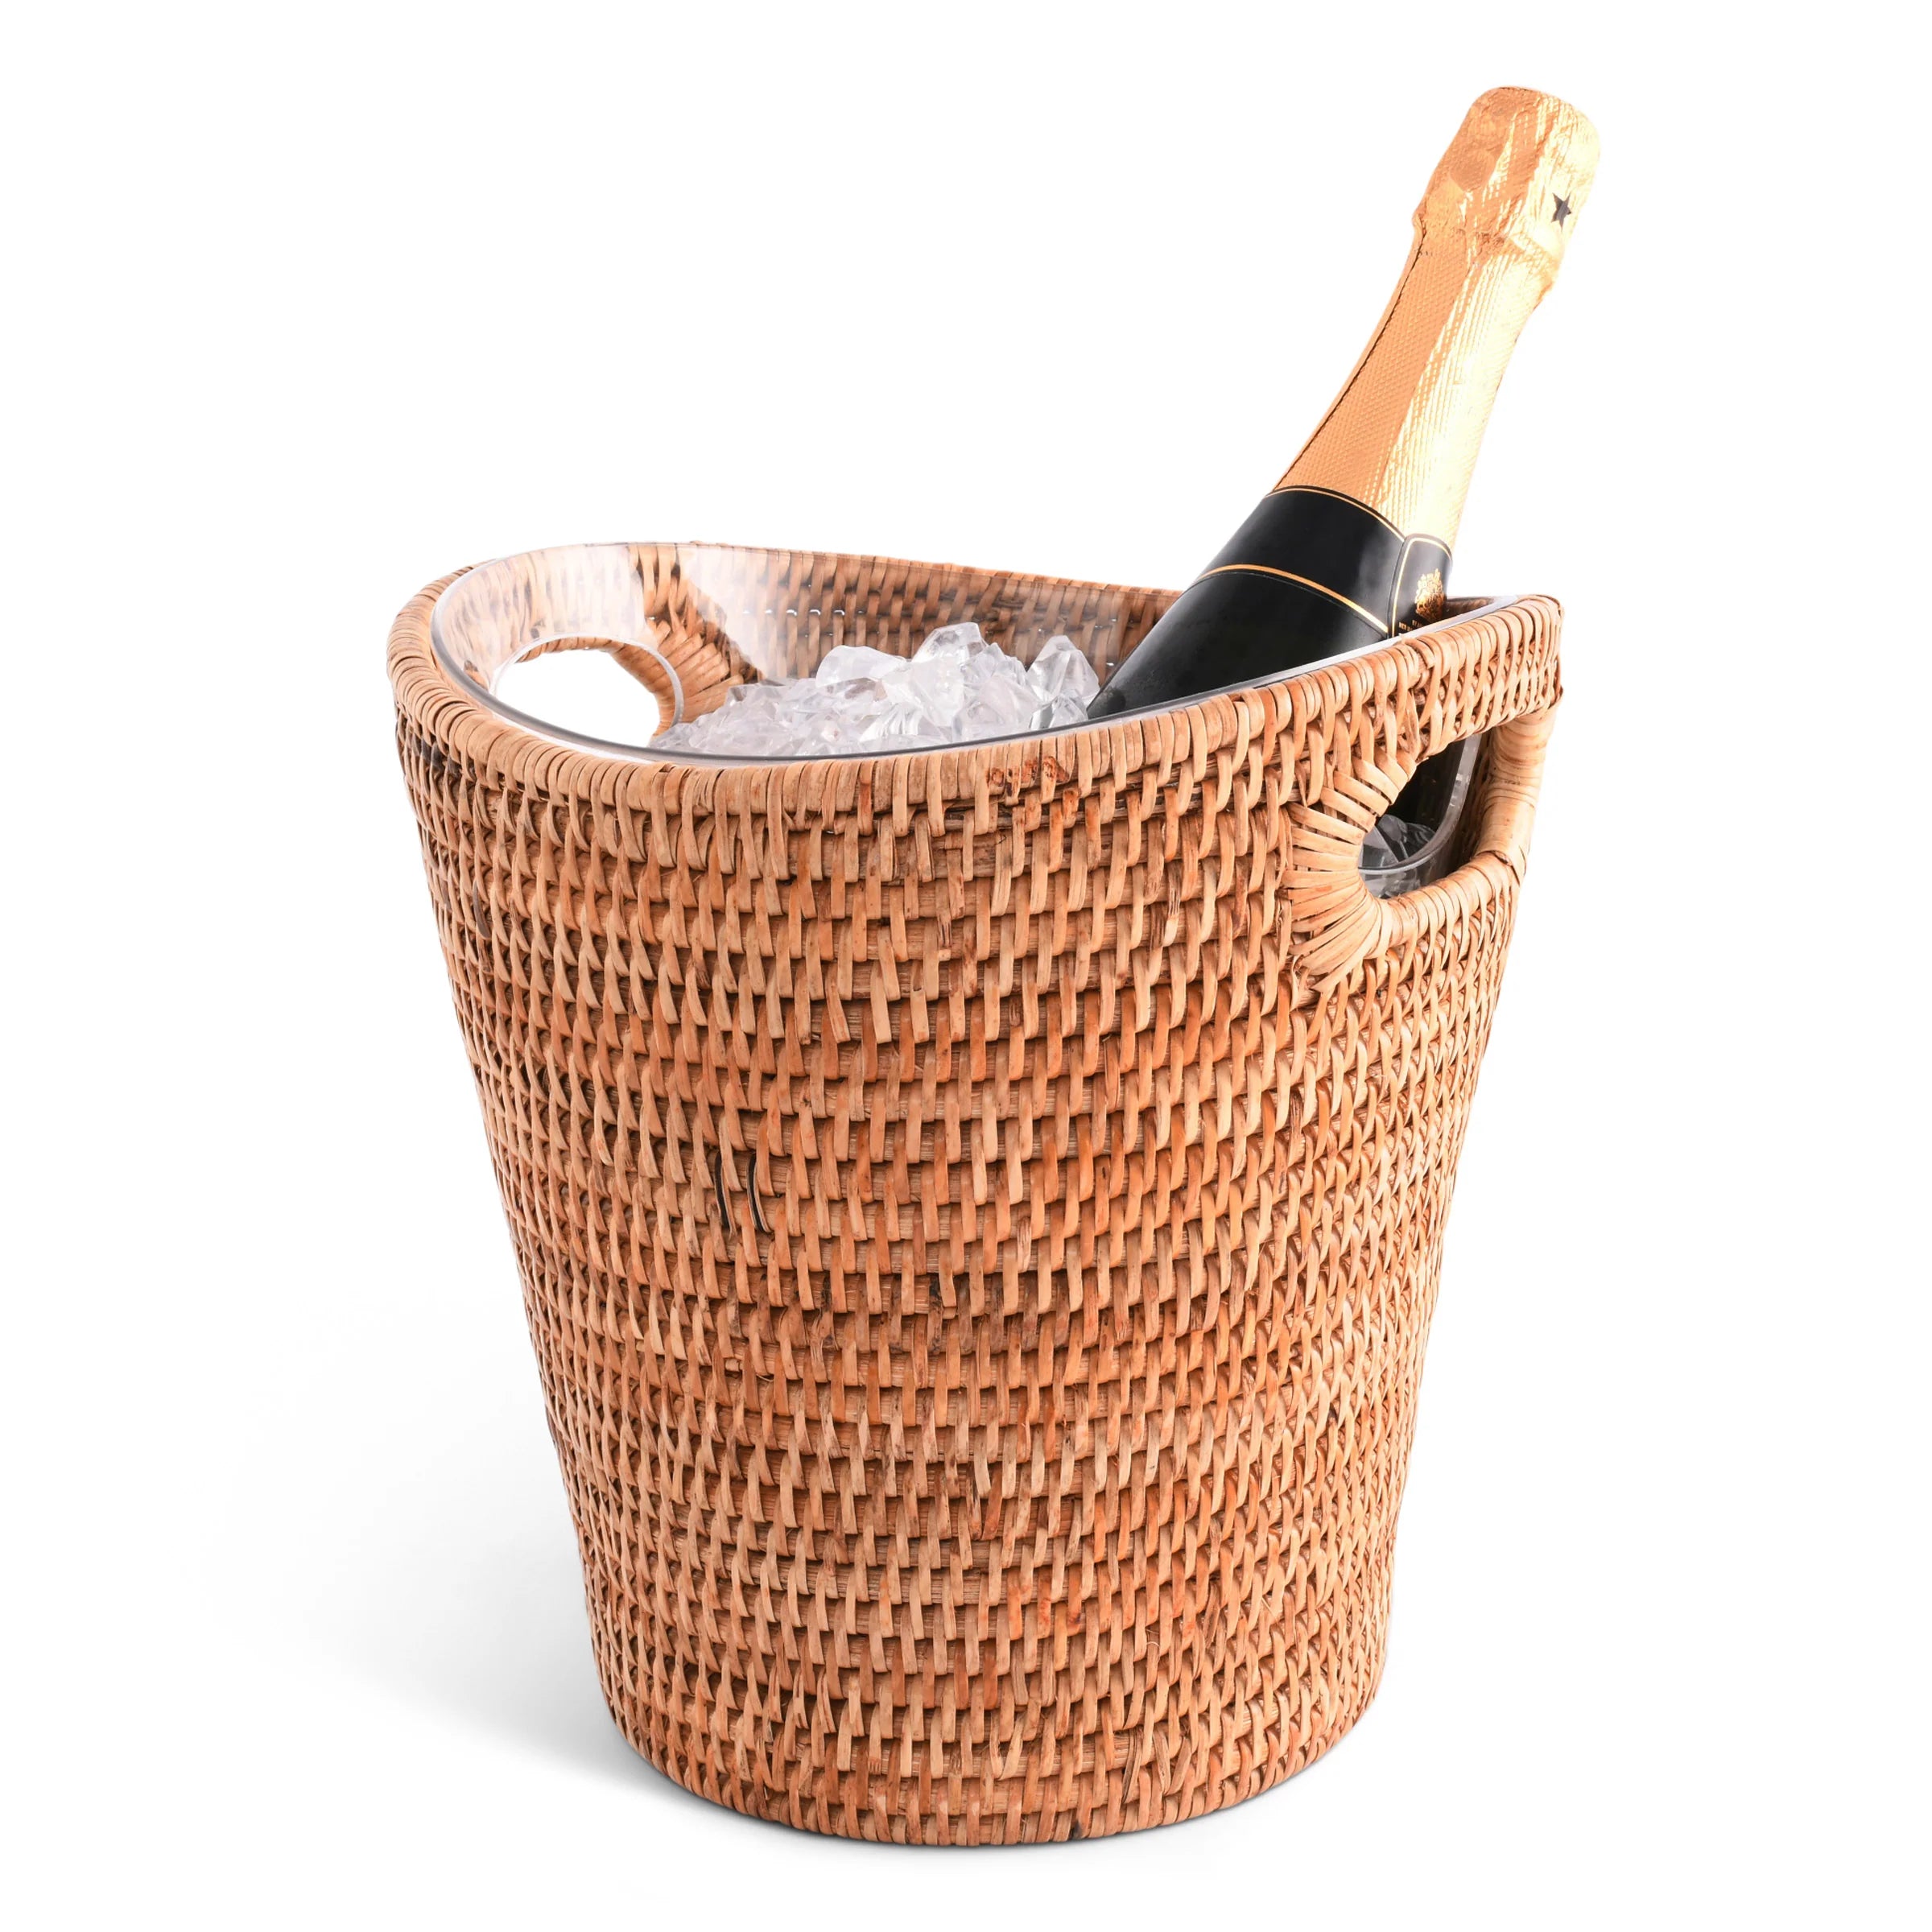 Hand Woven Wicker Rattan Champagne Bucket / Ice Bucket